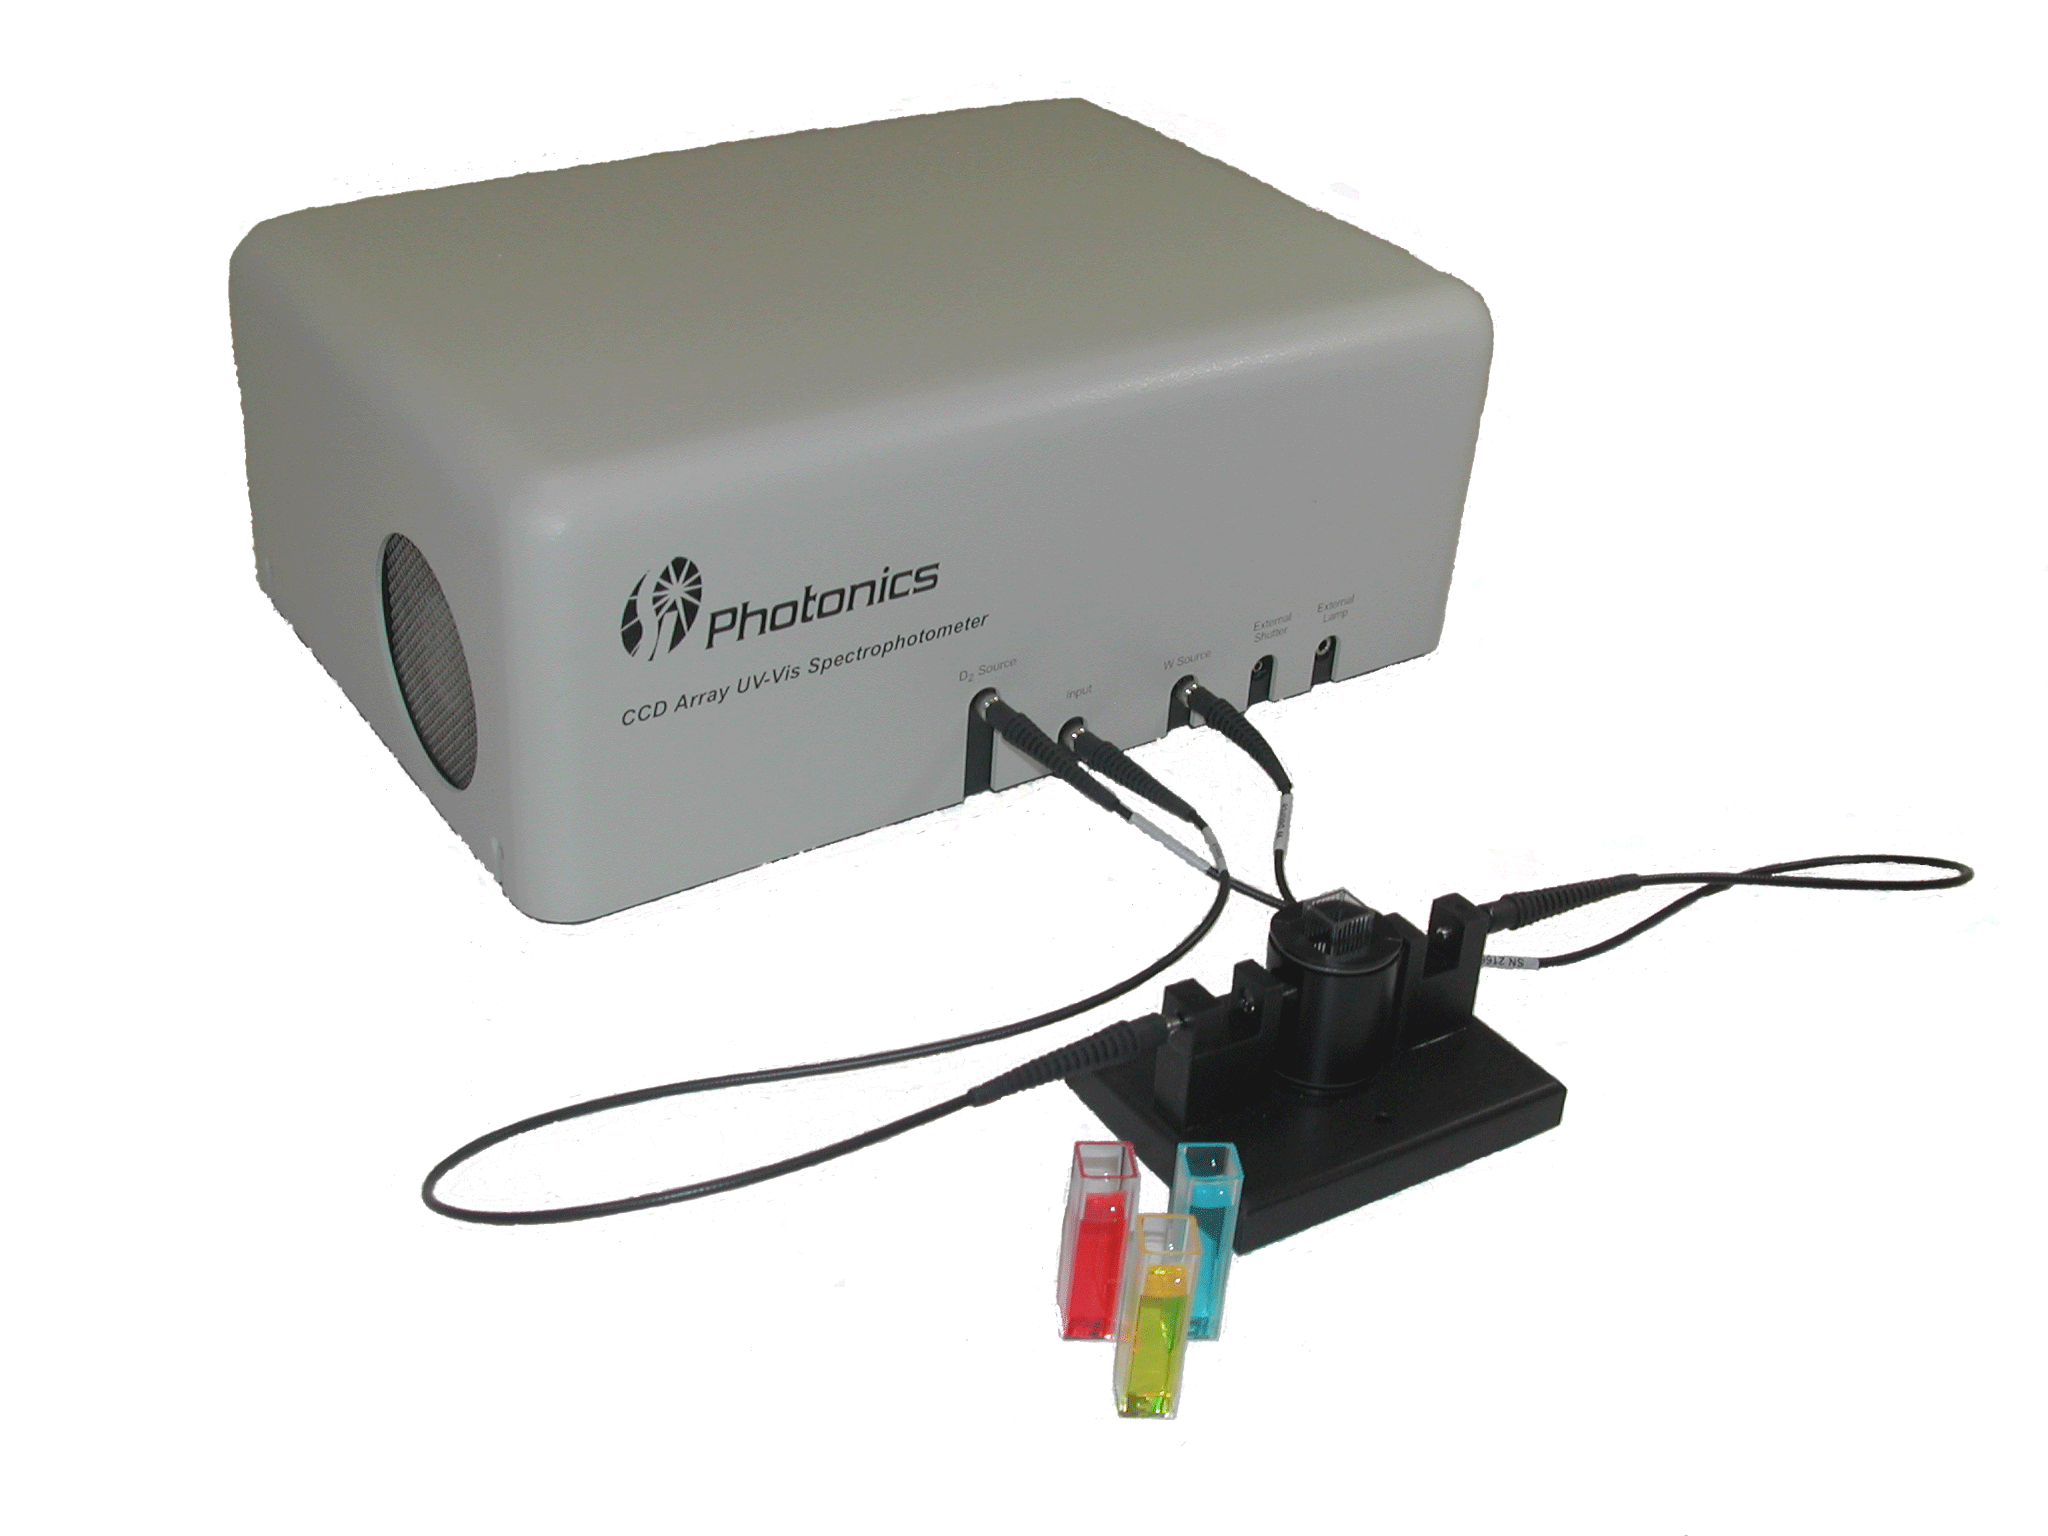 S. I. Photonics Model 440 UV-Vis Spectrophotometer with Dip Probe